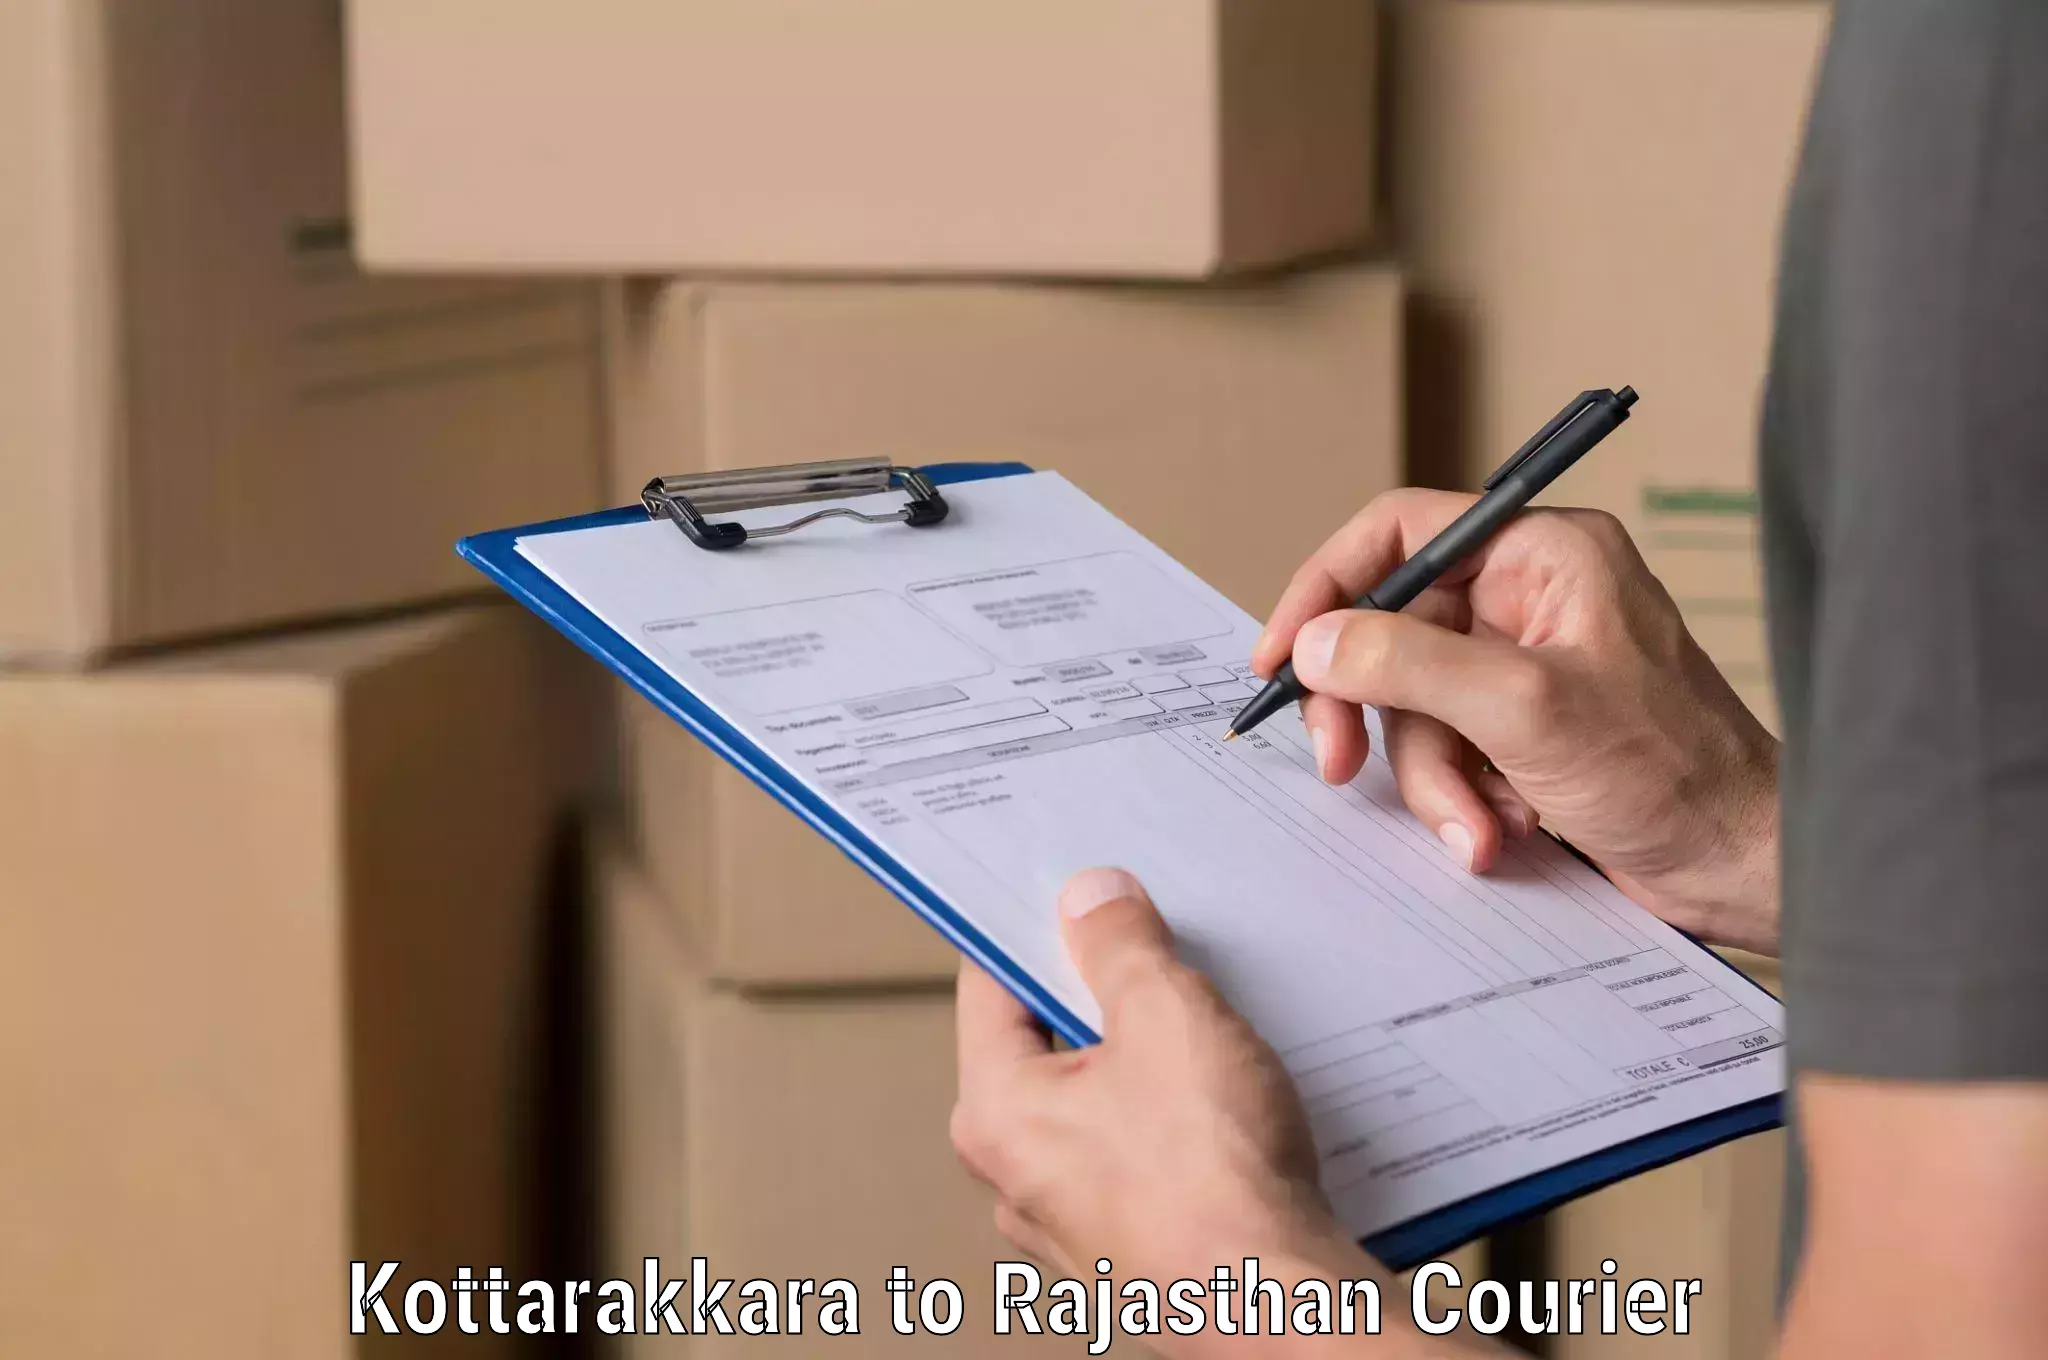 Digital courier platforms Kottarakkara to Sangaria